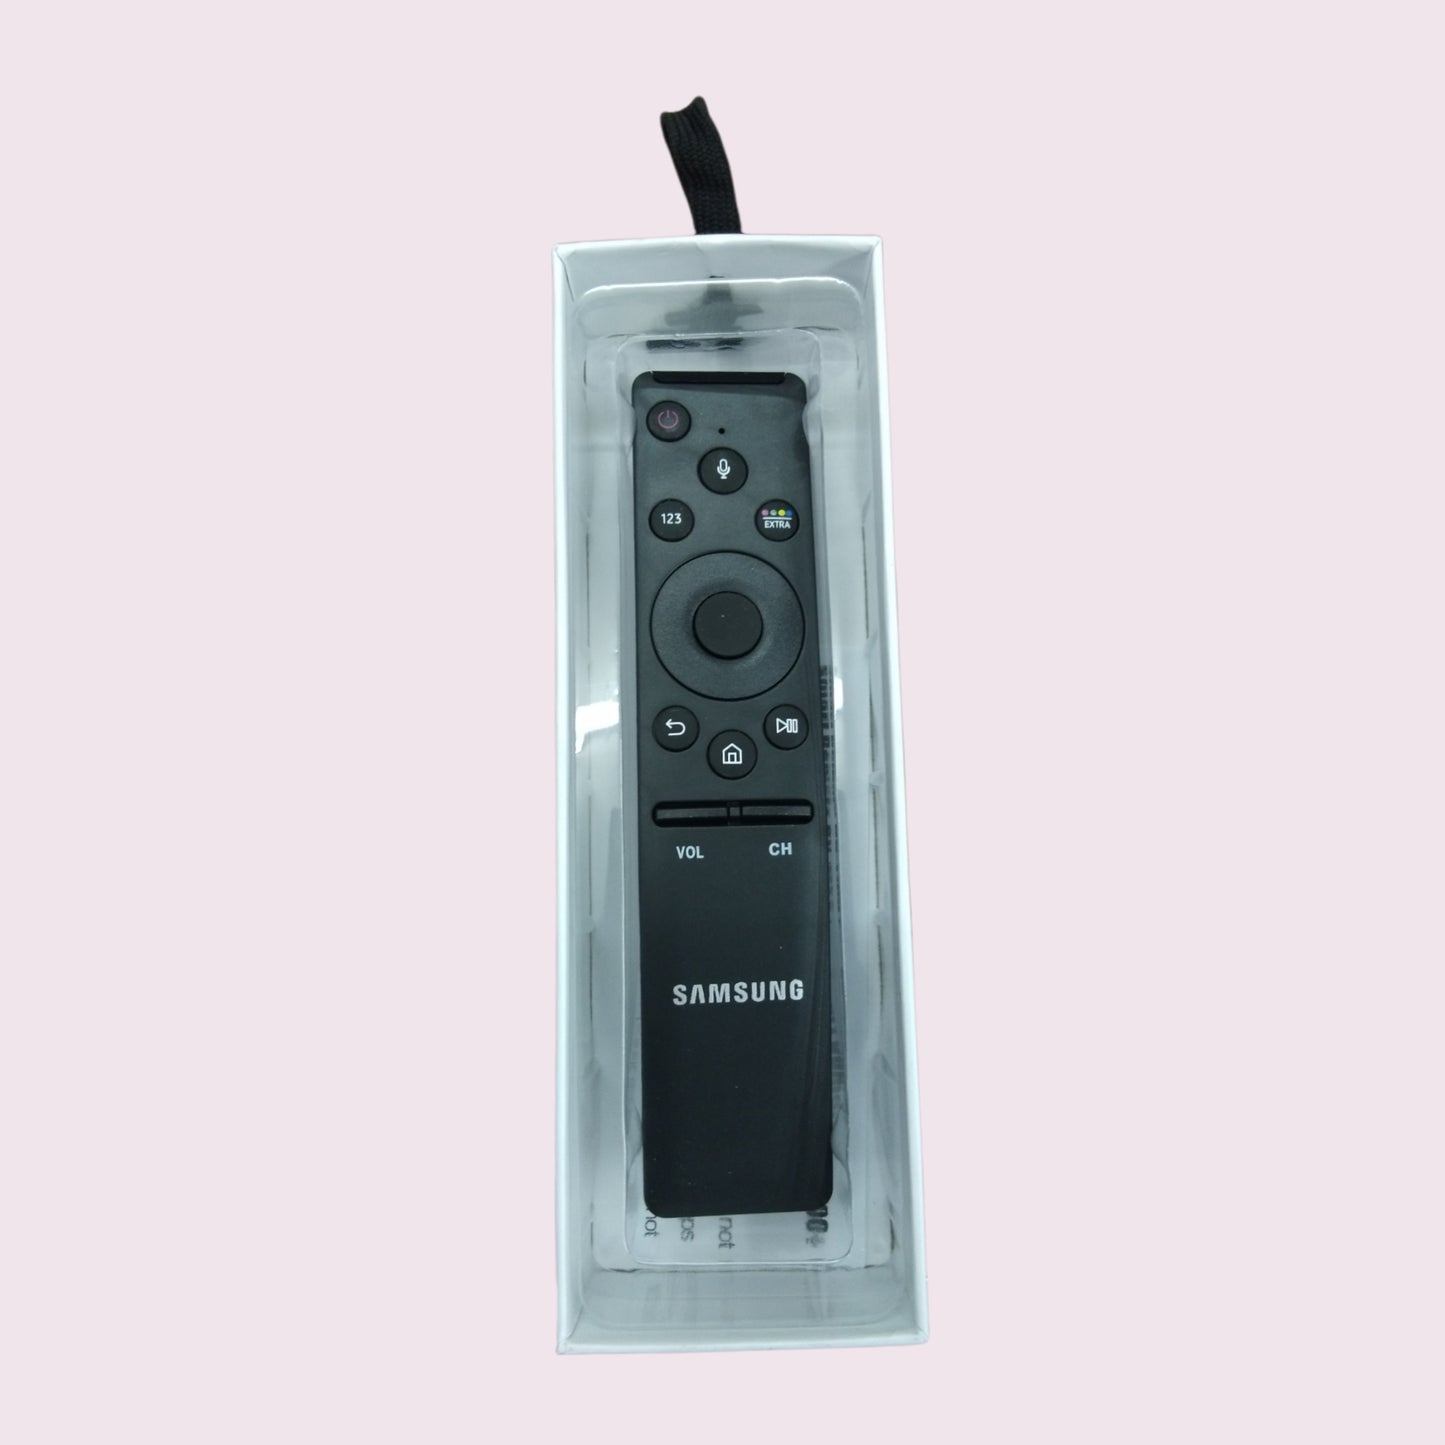 Samsung Smart TV remote control with voice recognition - Faritha